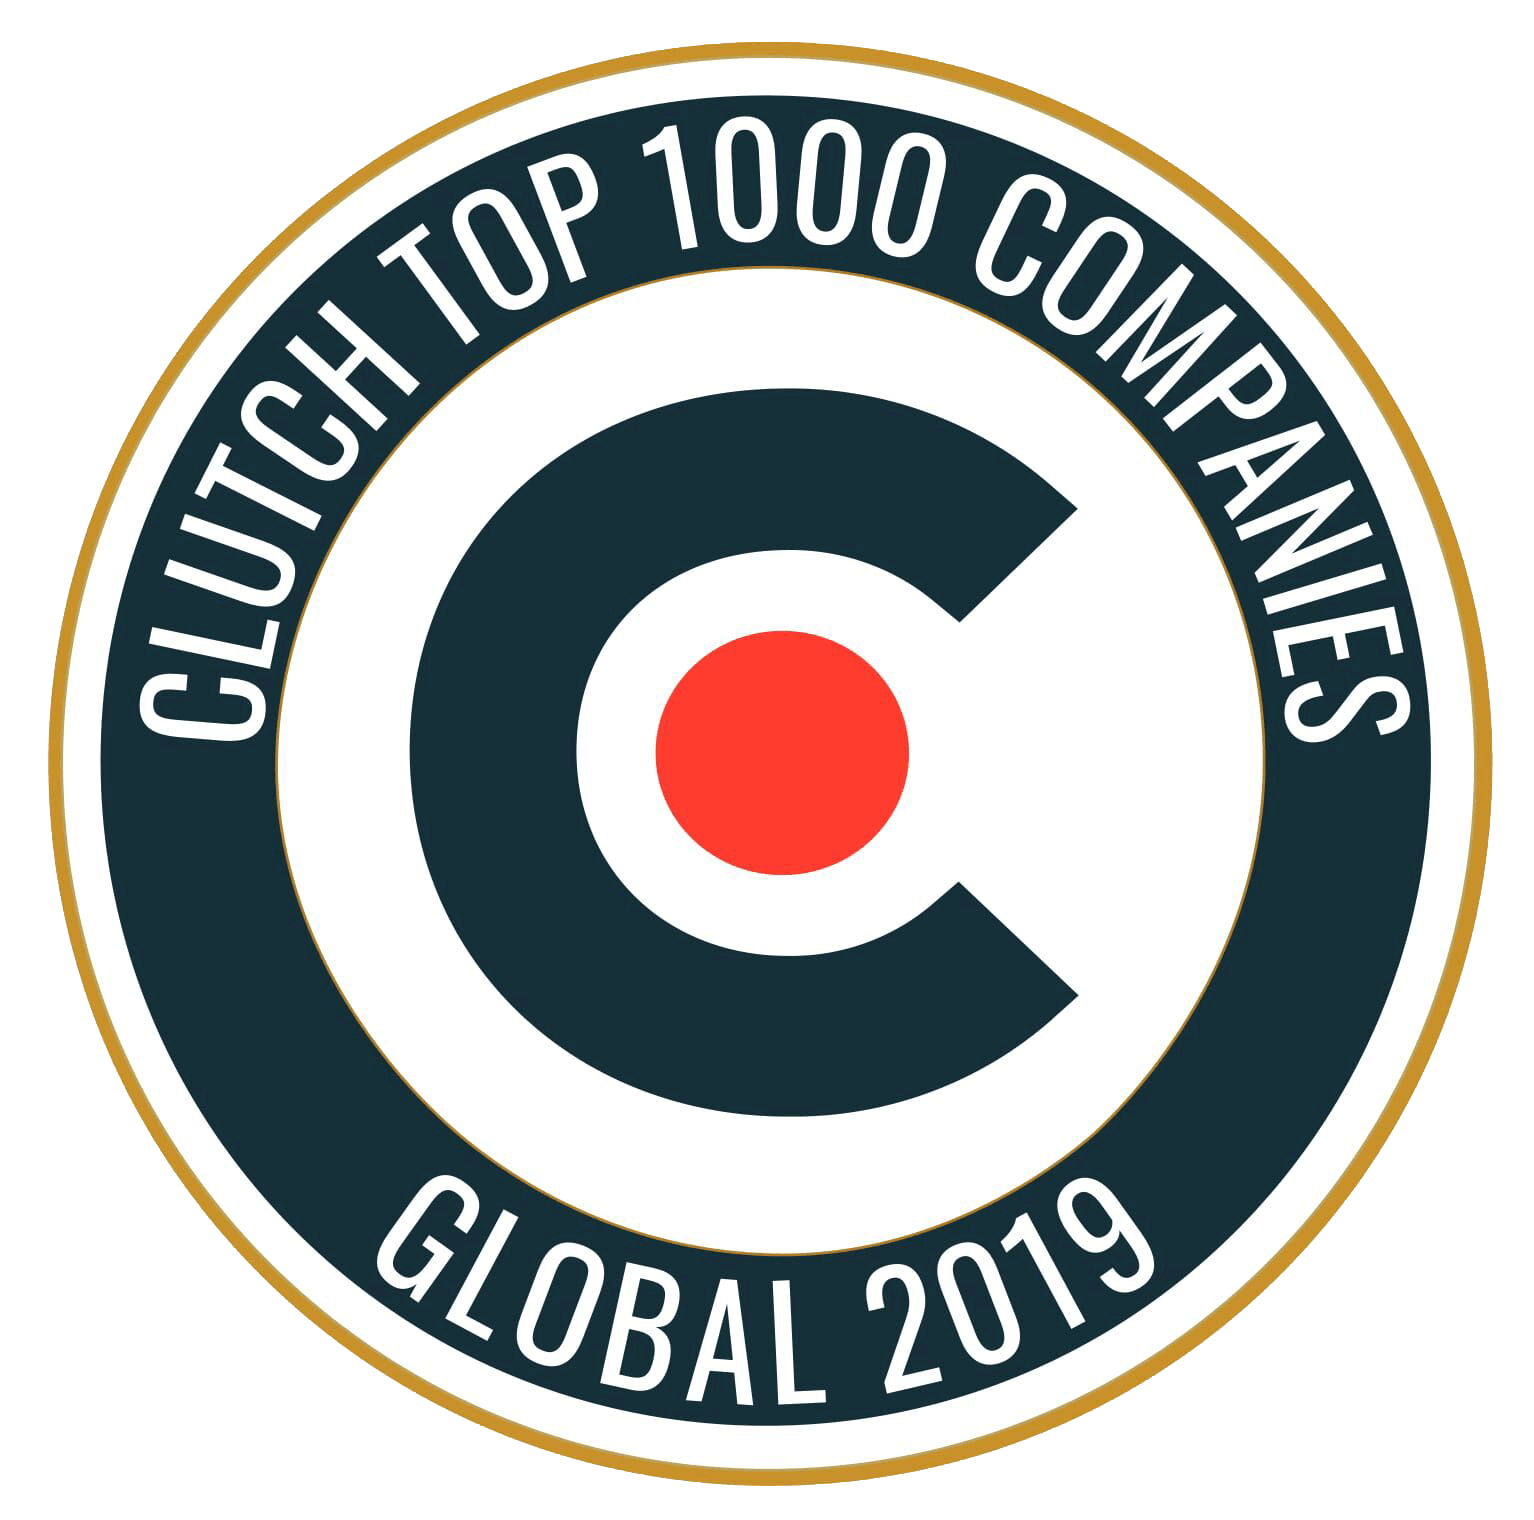 Clutch Top 1000 Companies - Global 2019